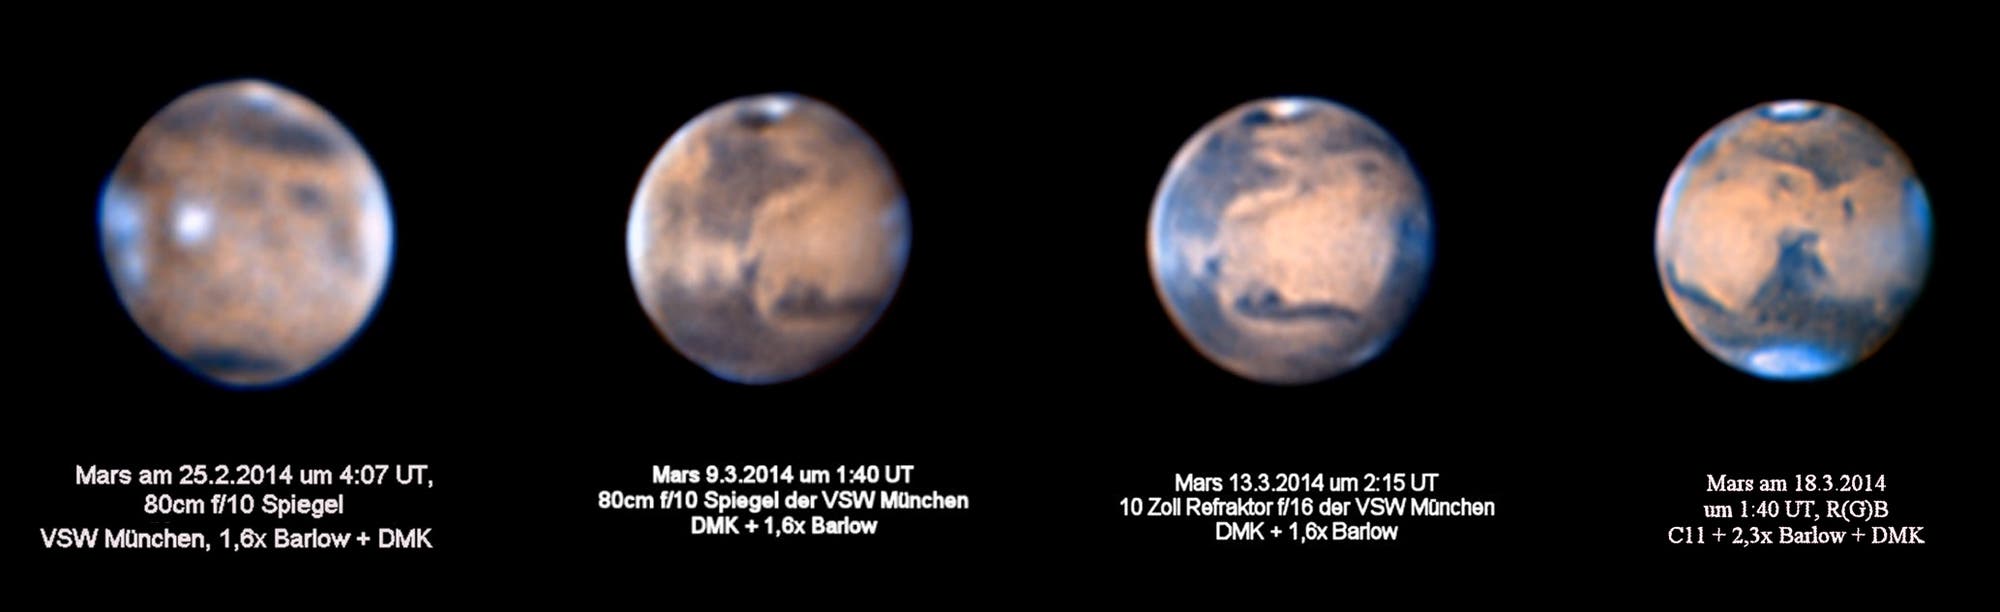 Mars im 1. Quartal 2014